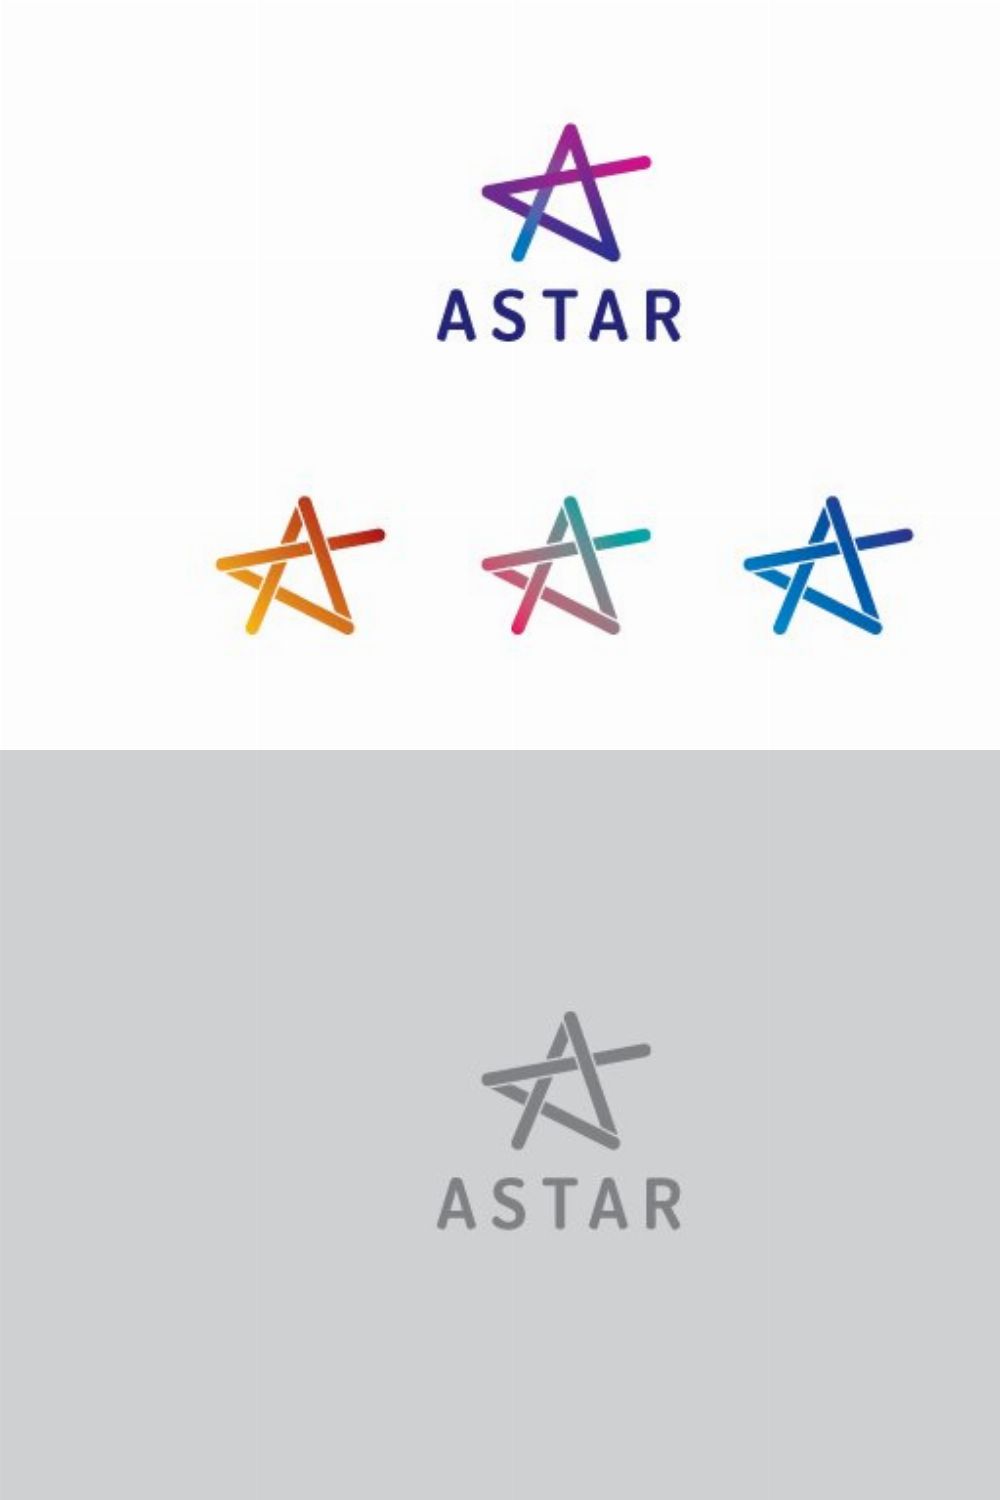 ASTAR_logo pinterest preview image.